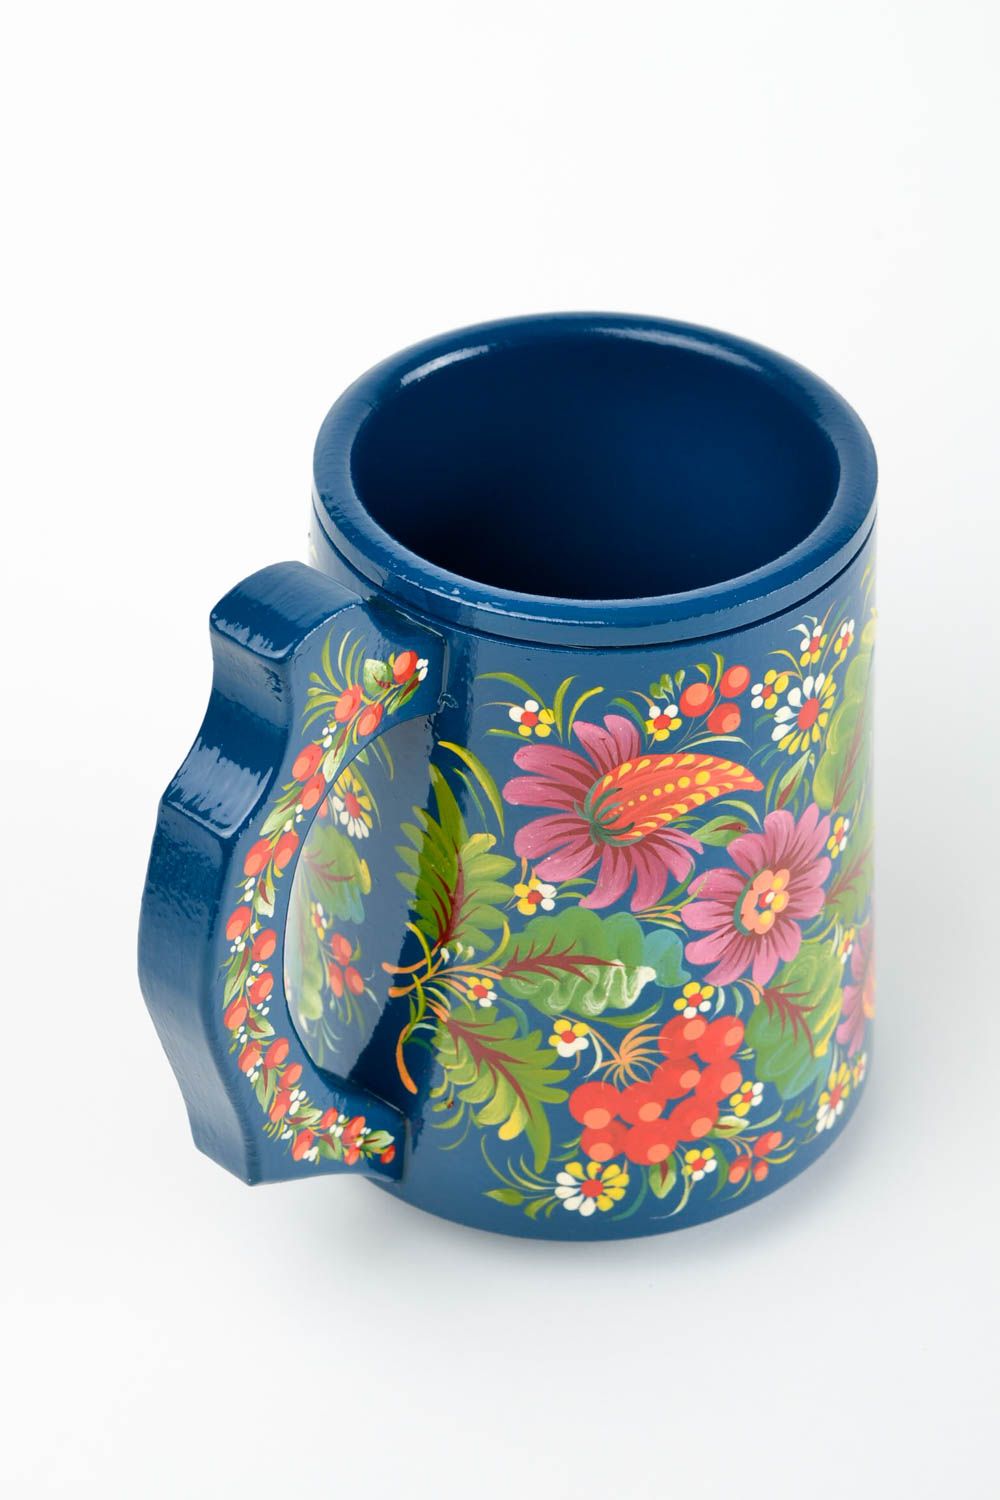 Handmade mug designer wooden glass unusual gift decorative use only decor ideas photo 5